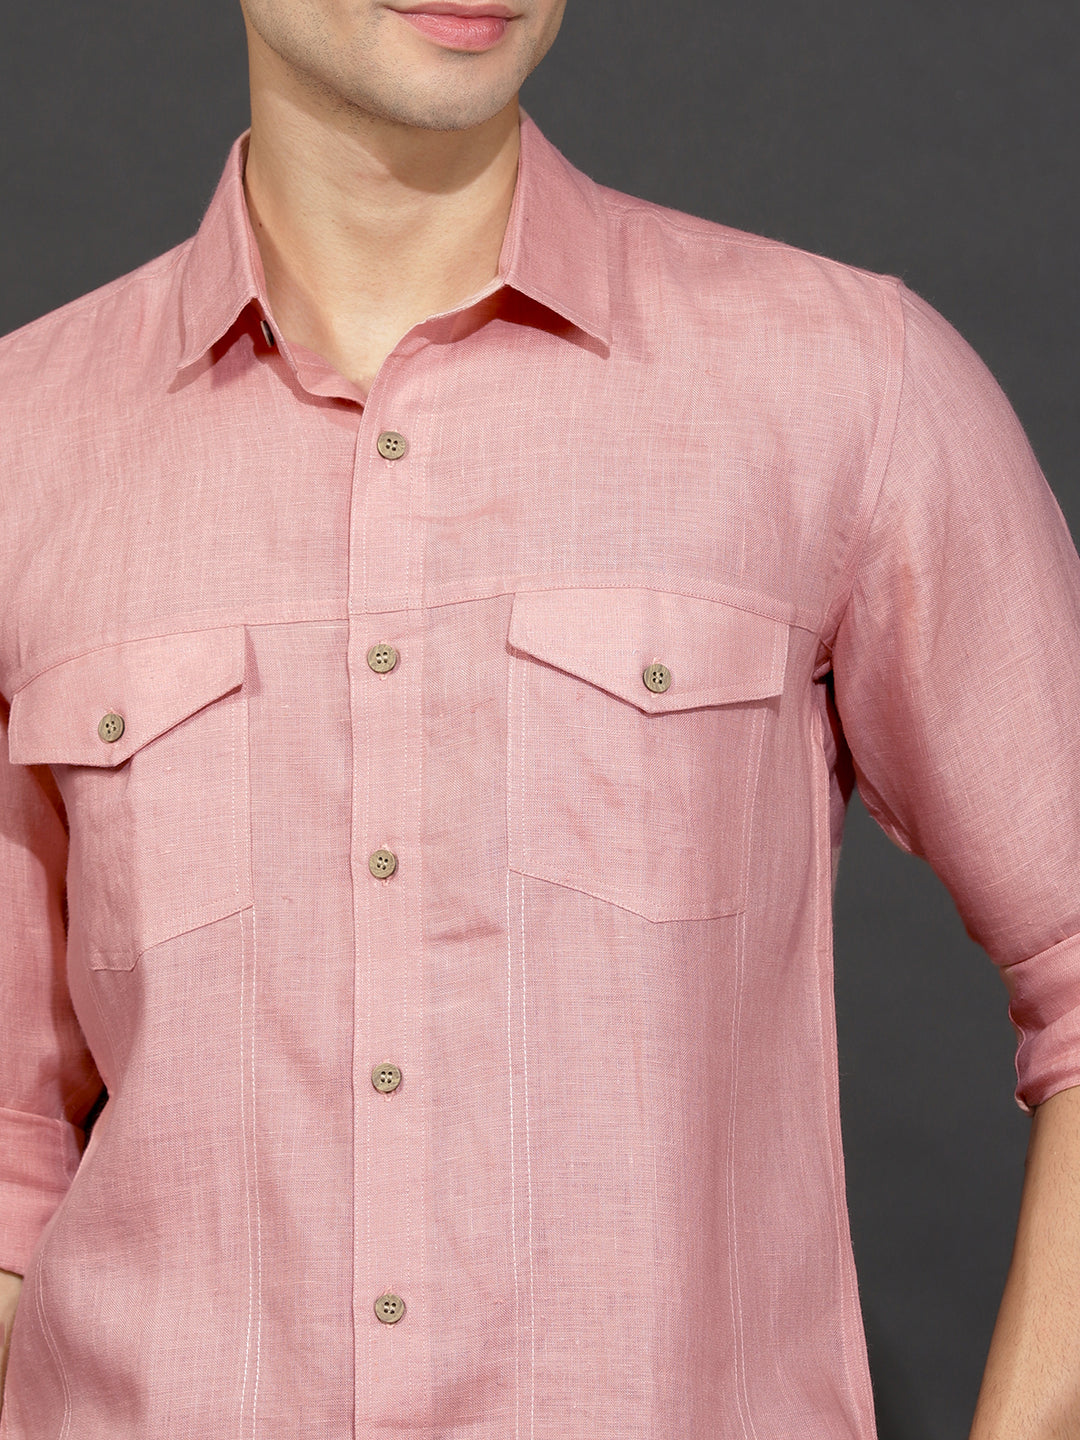 Thomas - Men's Pure Linen Double Pocket Full Sleeve Shirt - Salmon Pink